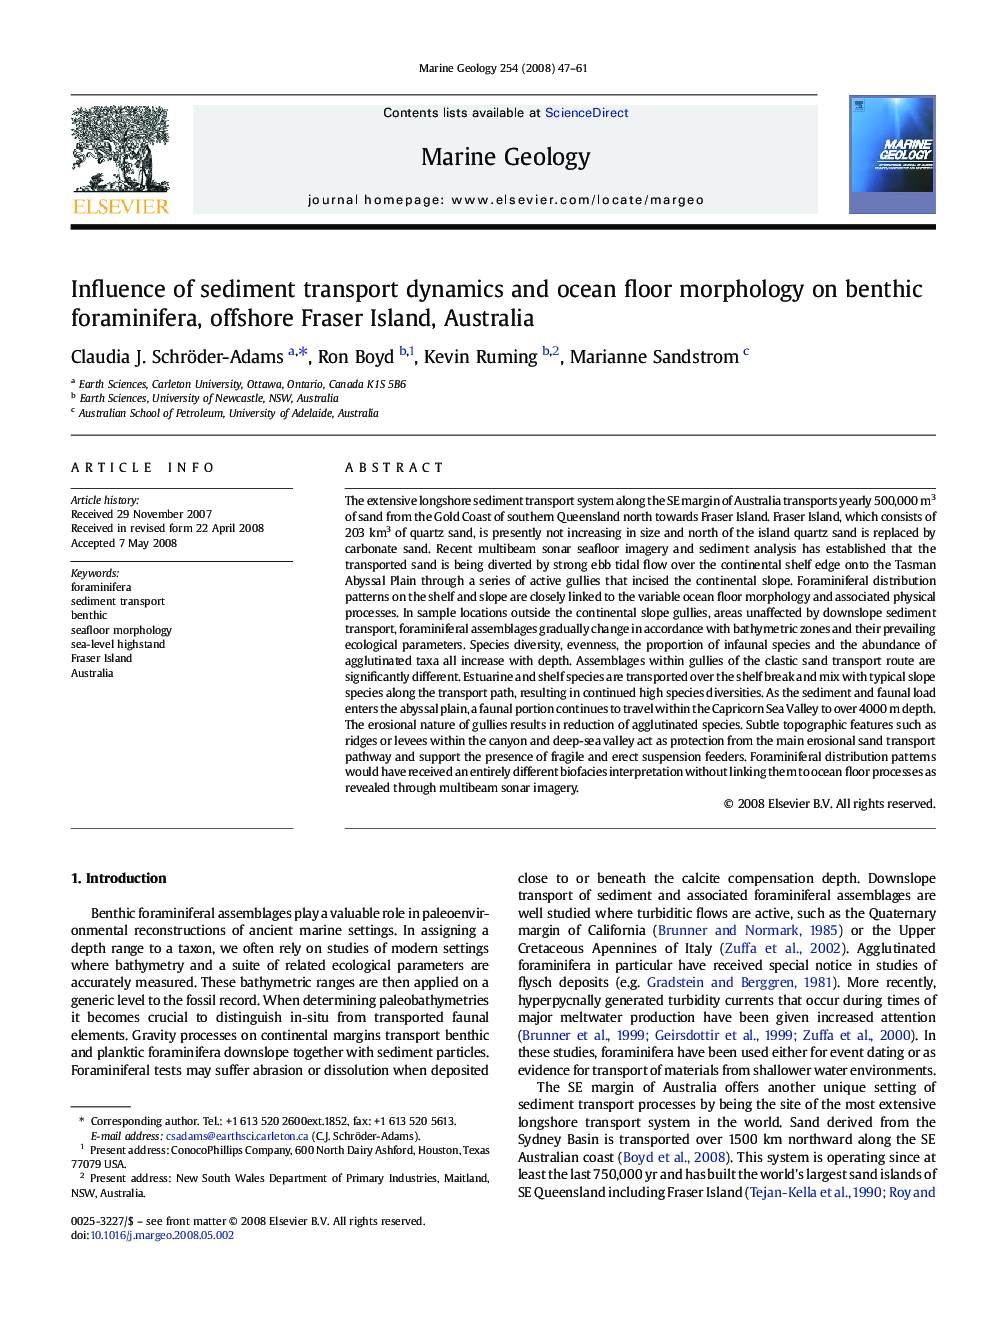 Influence of sediment transport dynamics and ocean floor morphology on benthic foraminifera, offshore Fraser Island, Australia